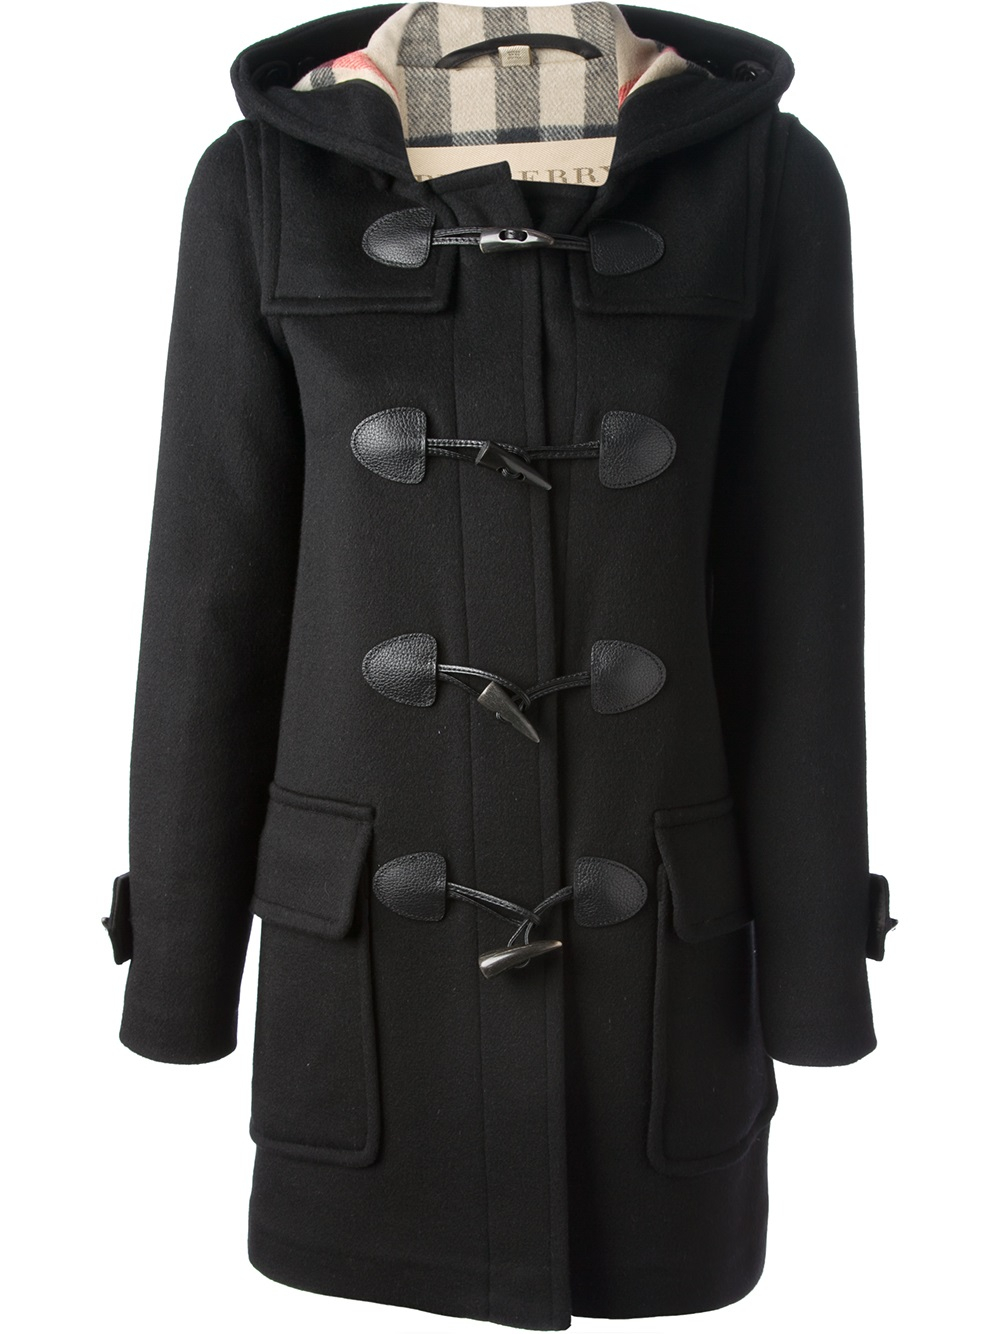 Lyst - Burberry Brit Hooded Coat in Black